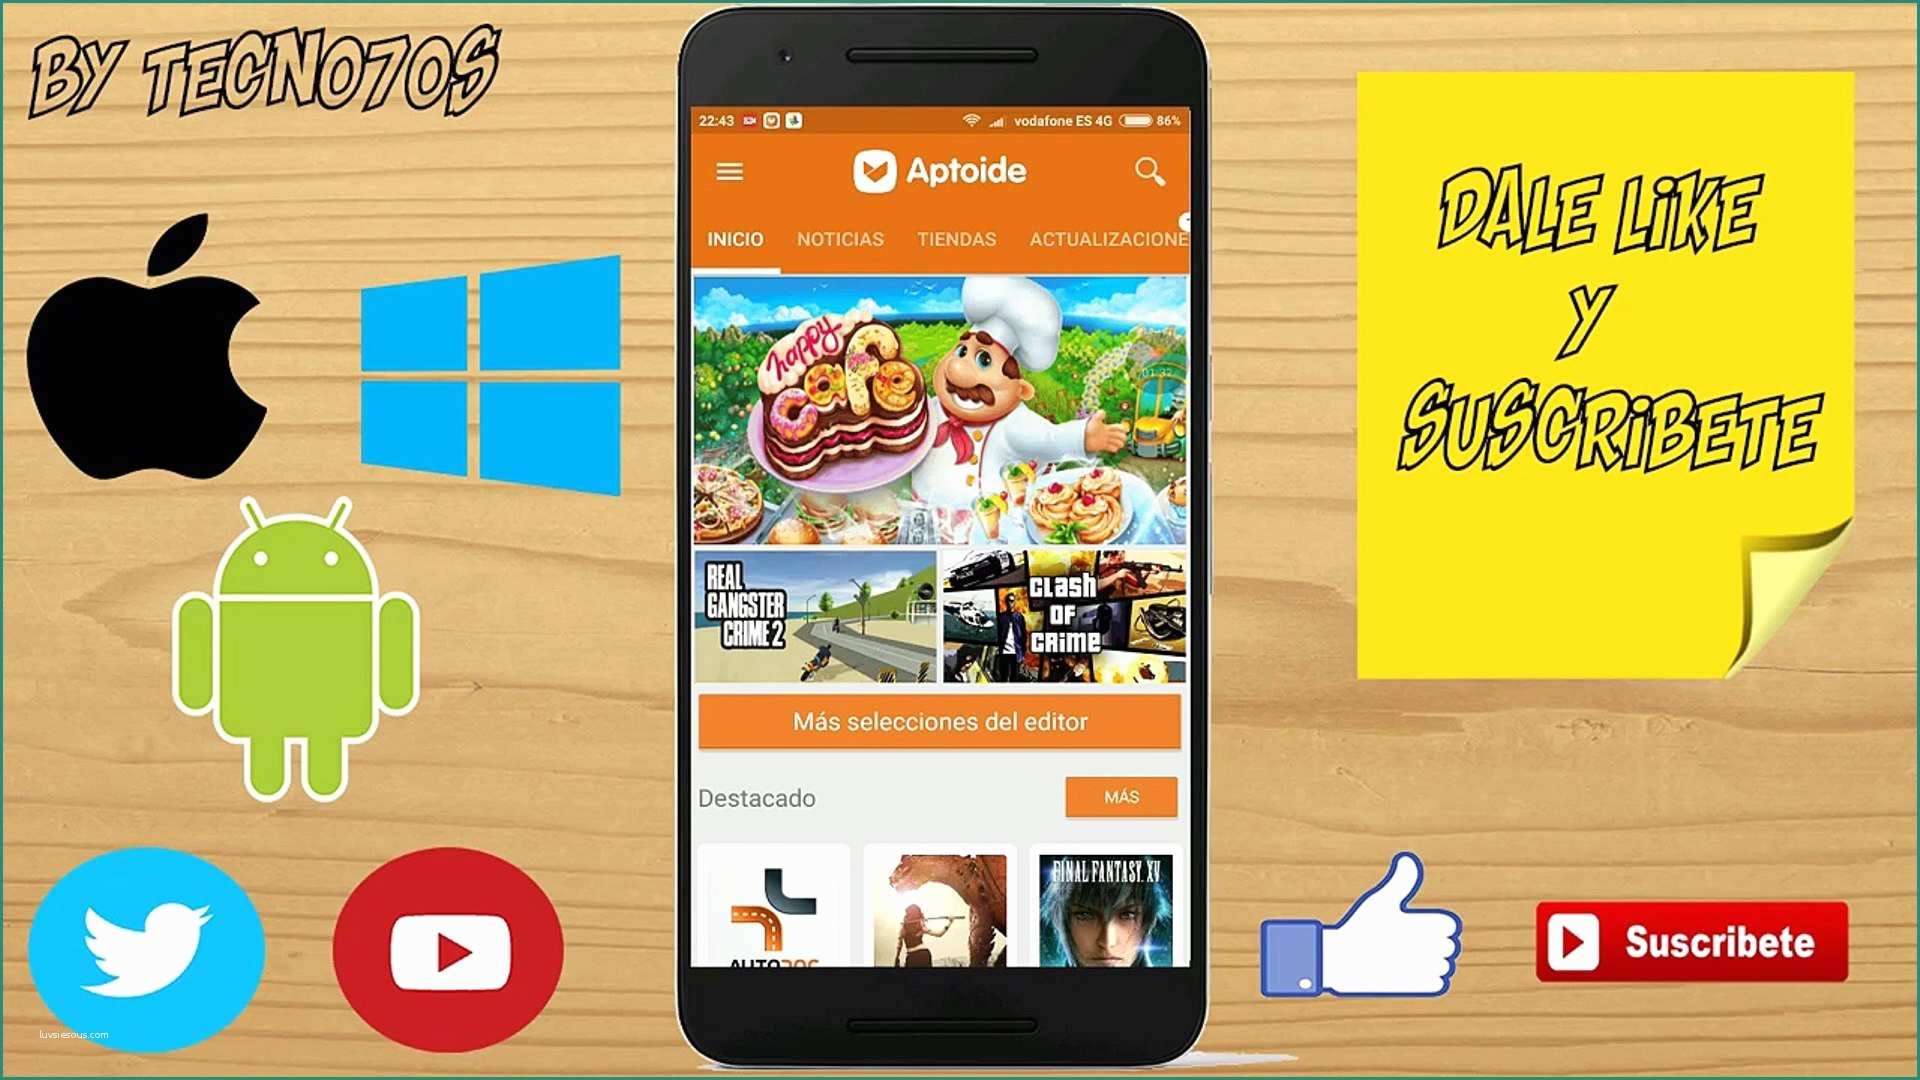 Scaricare Aptoide Gratis E Best Descargar Gta San andreas Para android Apk Aptoide Image Collection